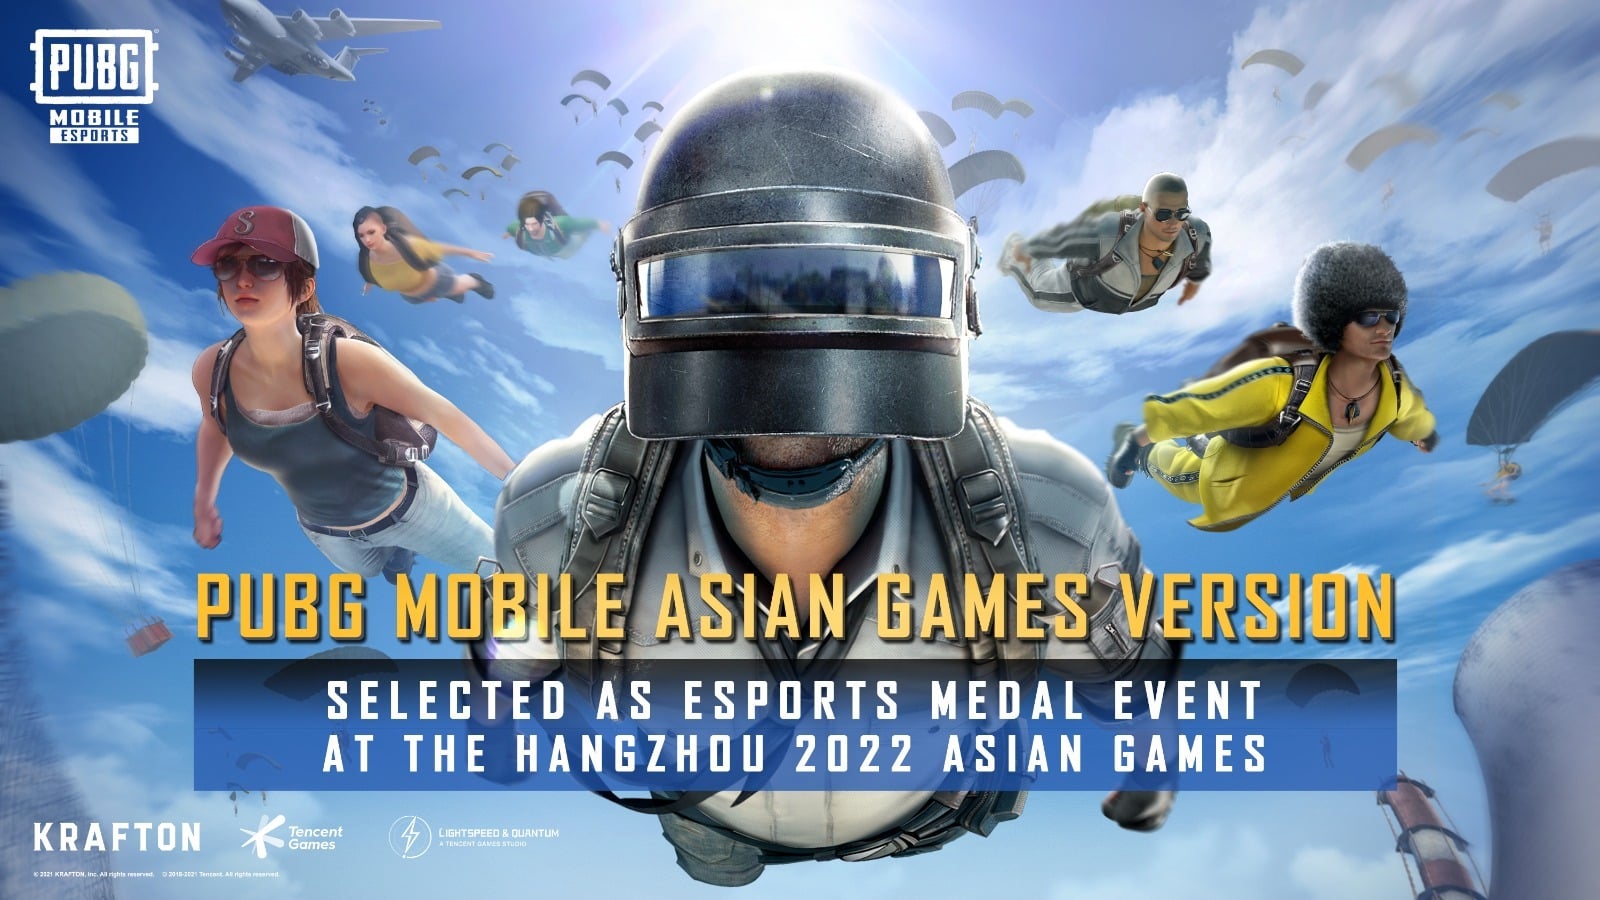 PUBG Mobile Asian Games